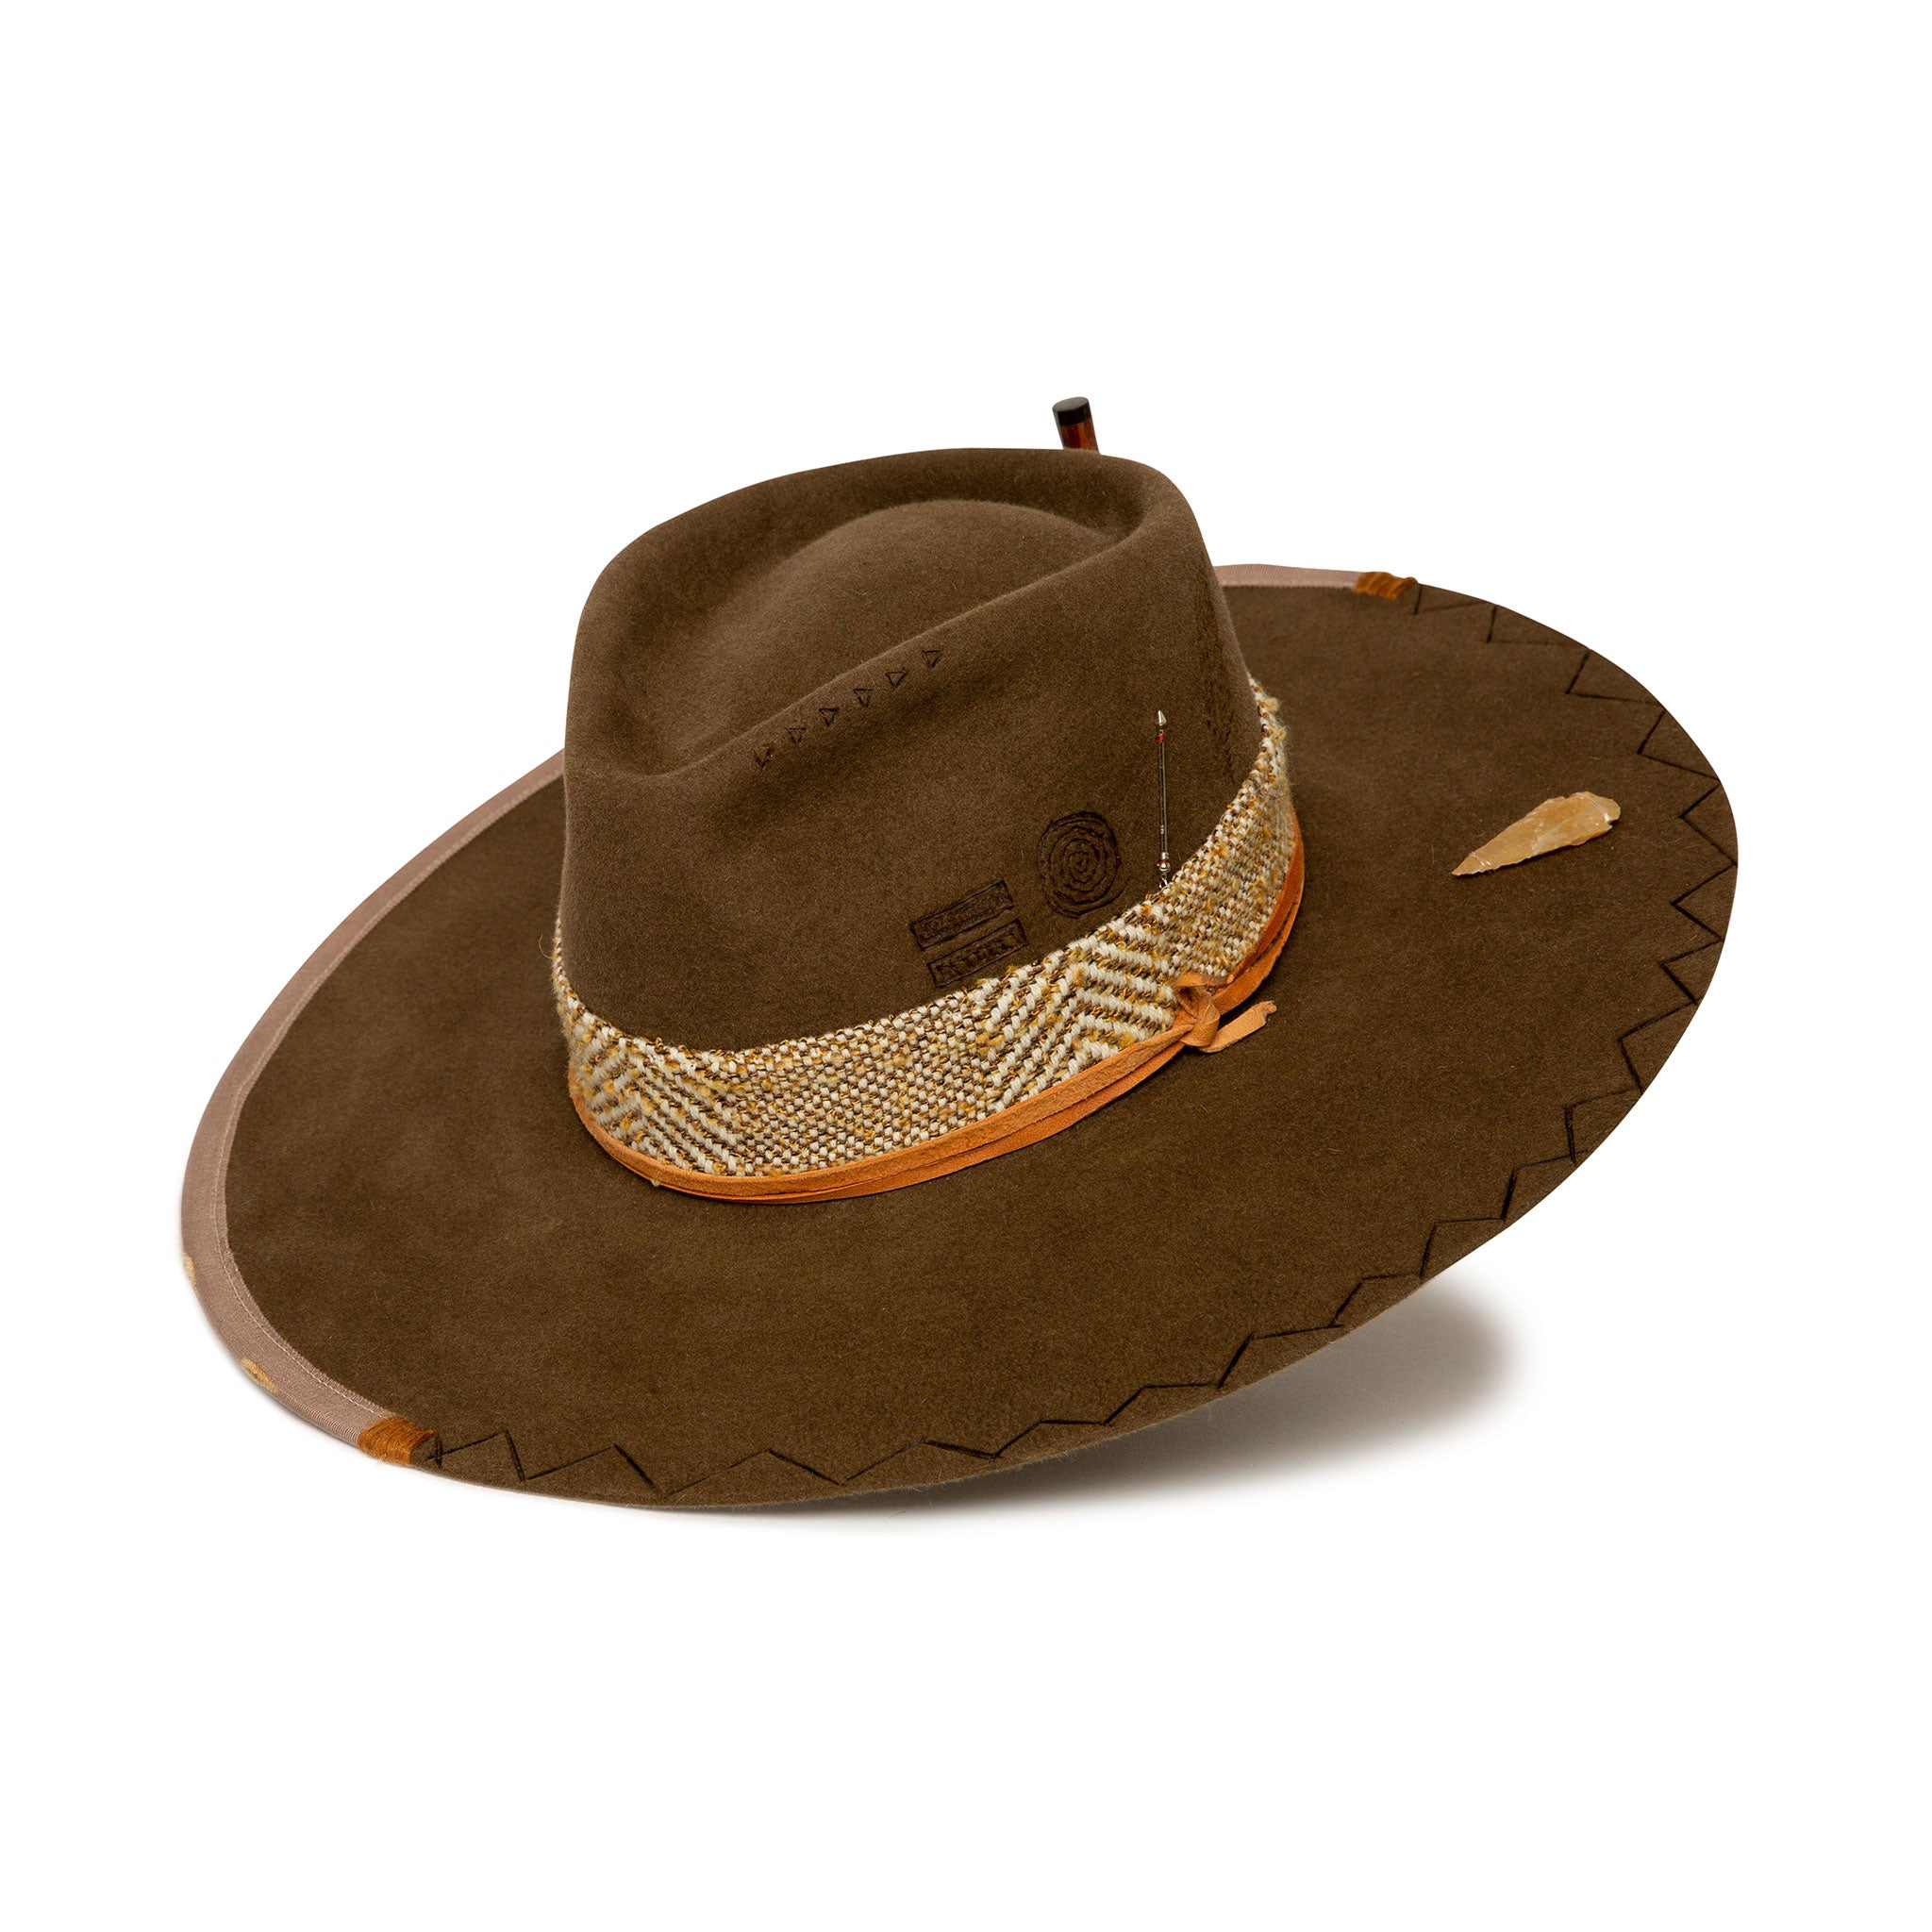 Meyers Manx 64 Costa Mesa Brown & White Hat